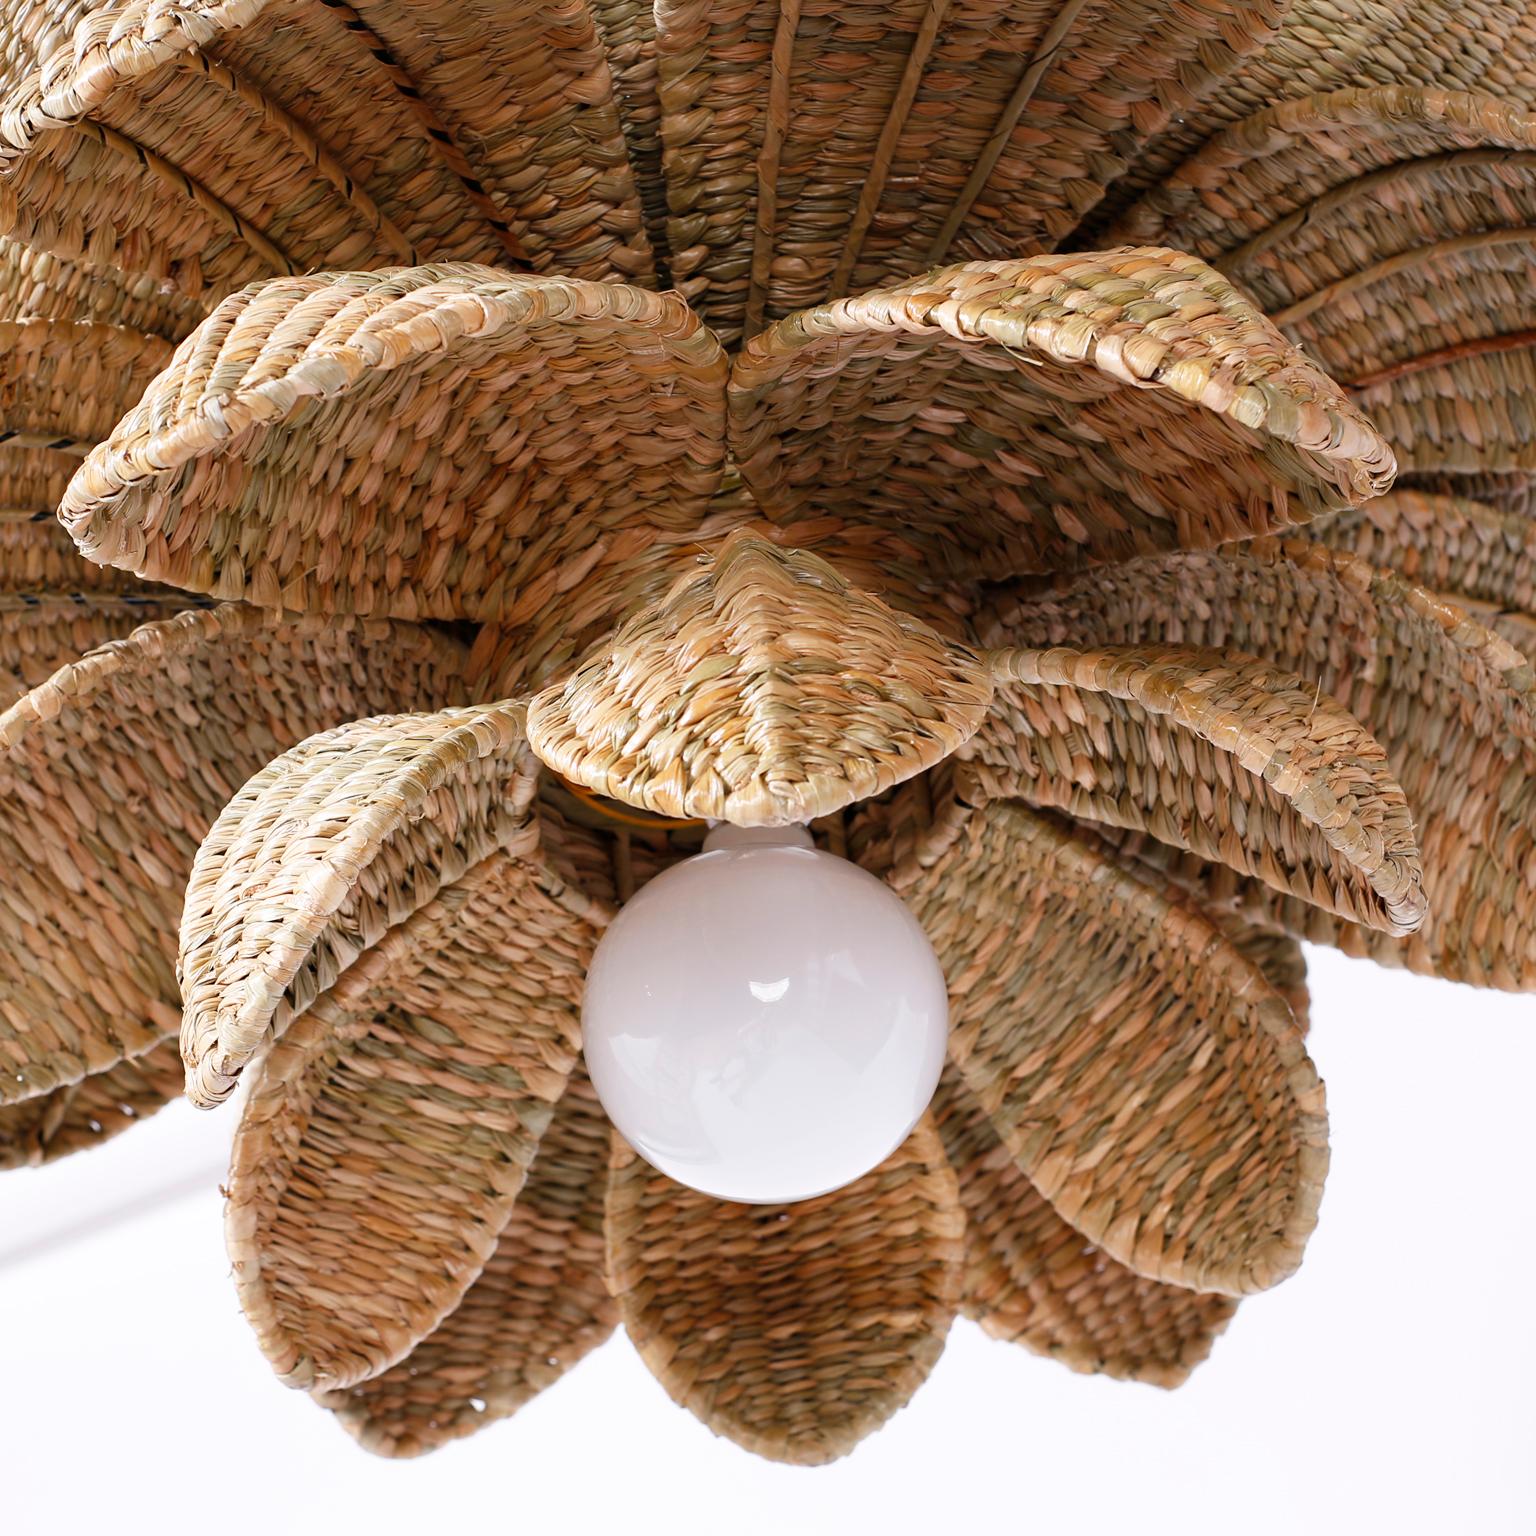 Hand-Woven Wicker Lotus Form Light Fixture or Pendant